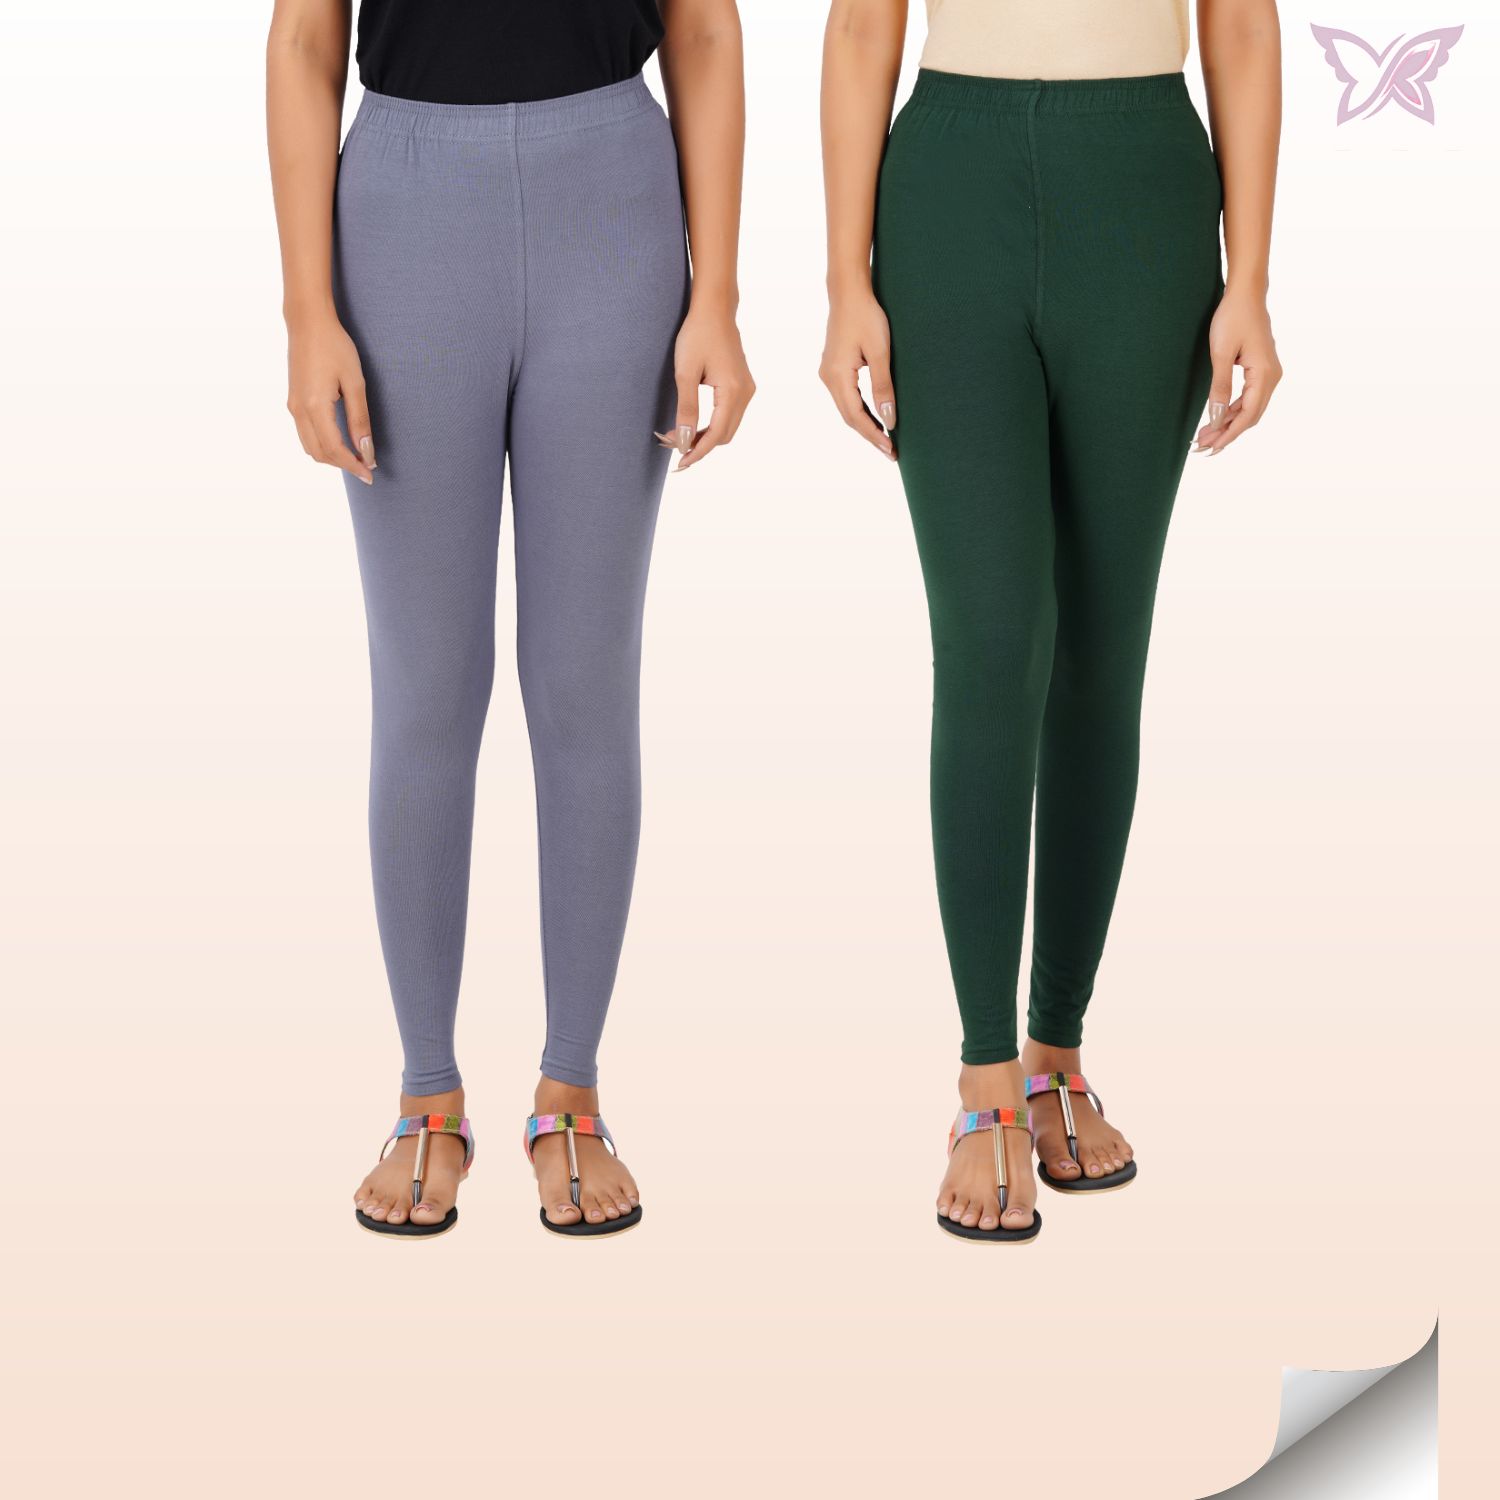 RED TAPE Solid Women Grey Tights - Buy RED TAPE Solid Women Grey Tights  Online at Best Prices in India | Flipkart.com